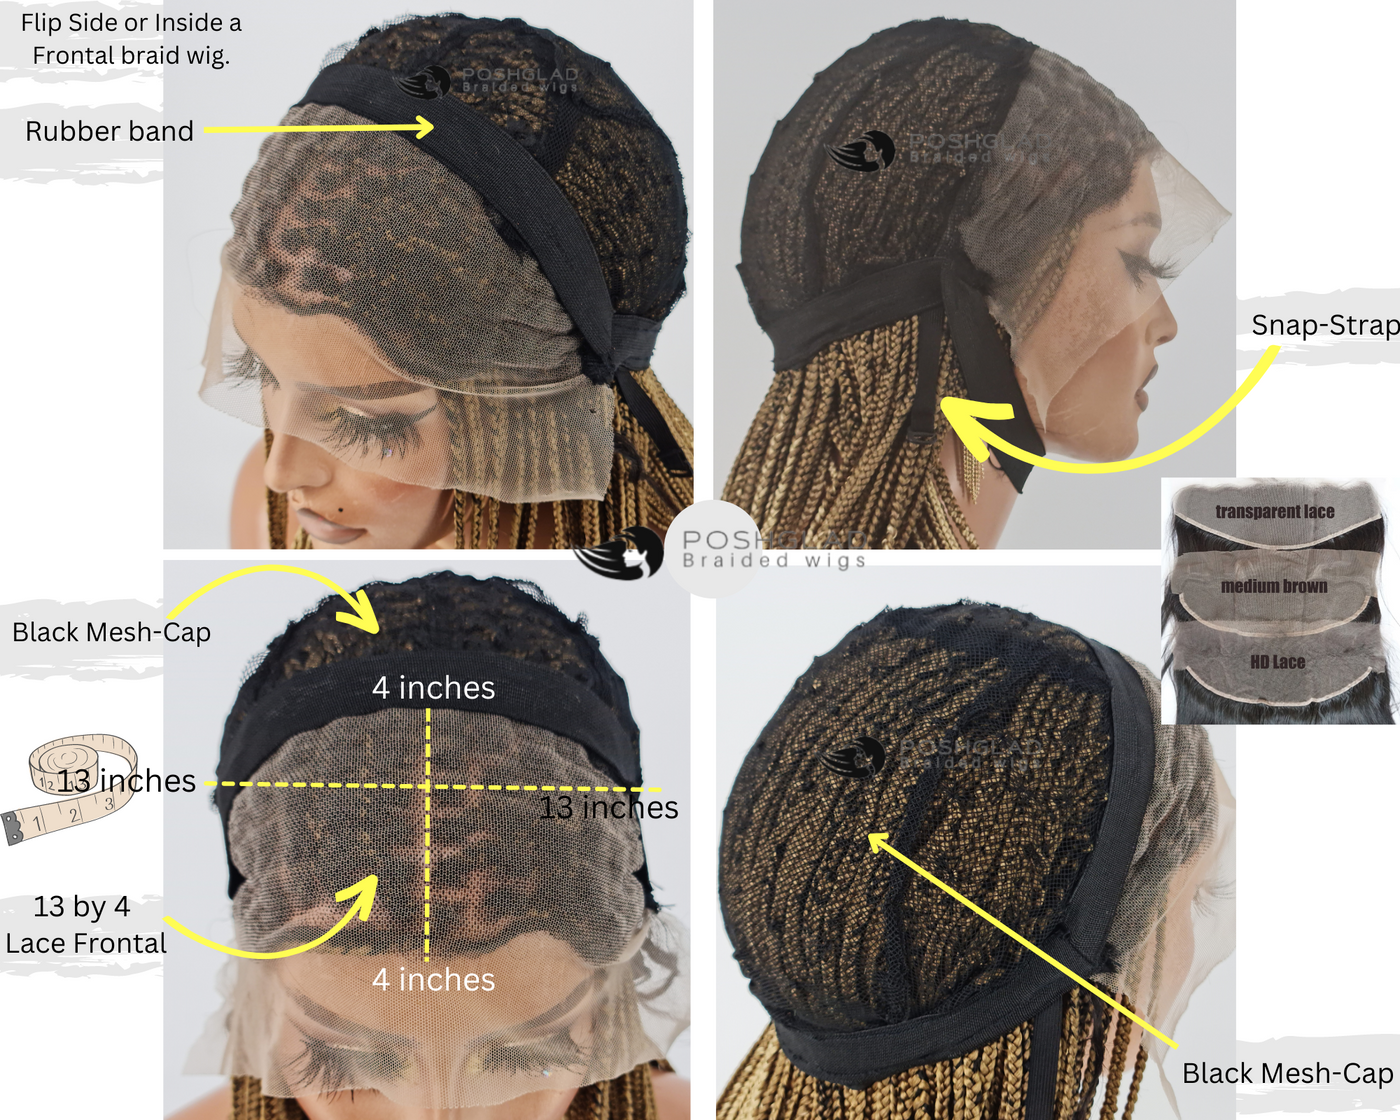 Cornrow Braid Wig - 13x4 Lace Frontal Side Part - Carol Poshglad Braided Wigs Cornrow Braid Wig